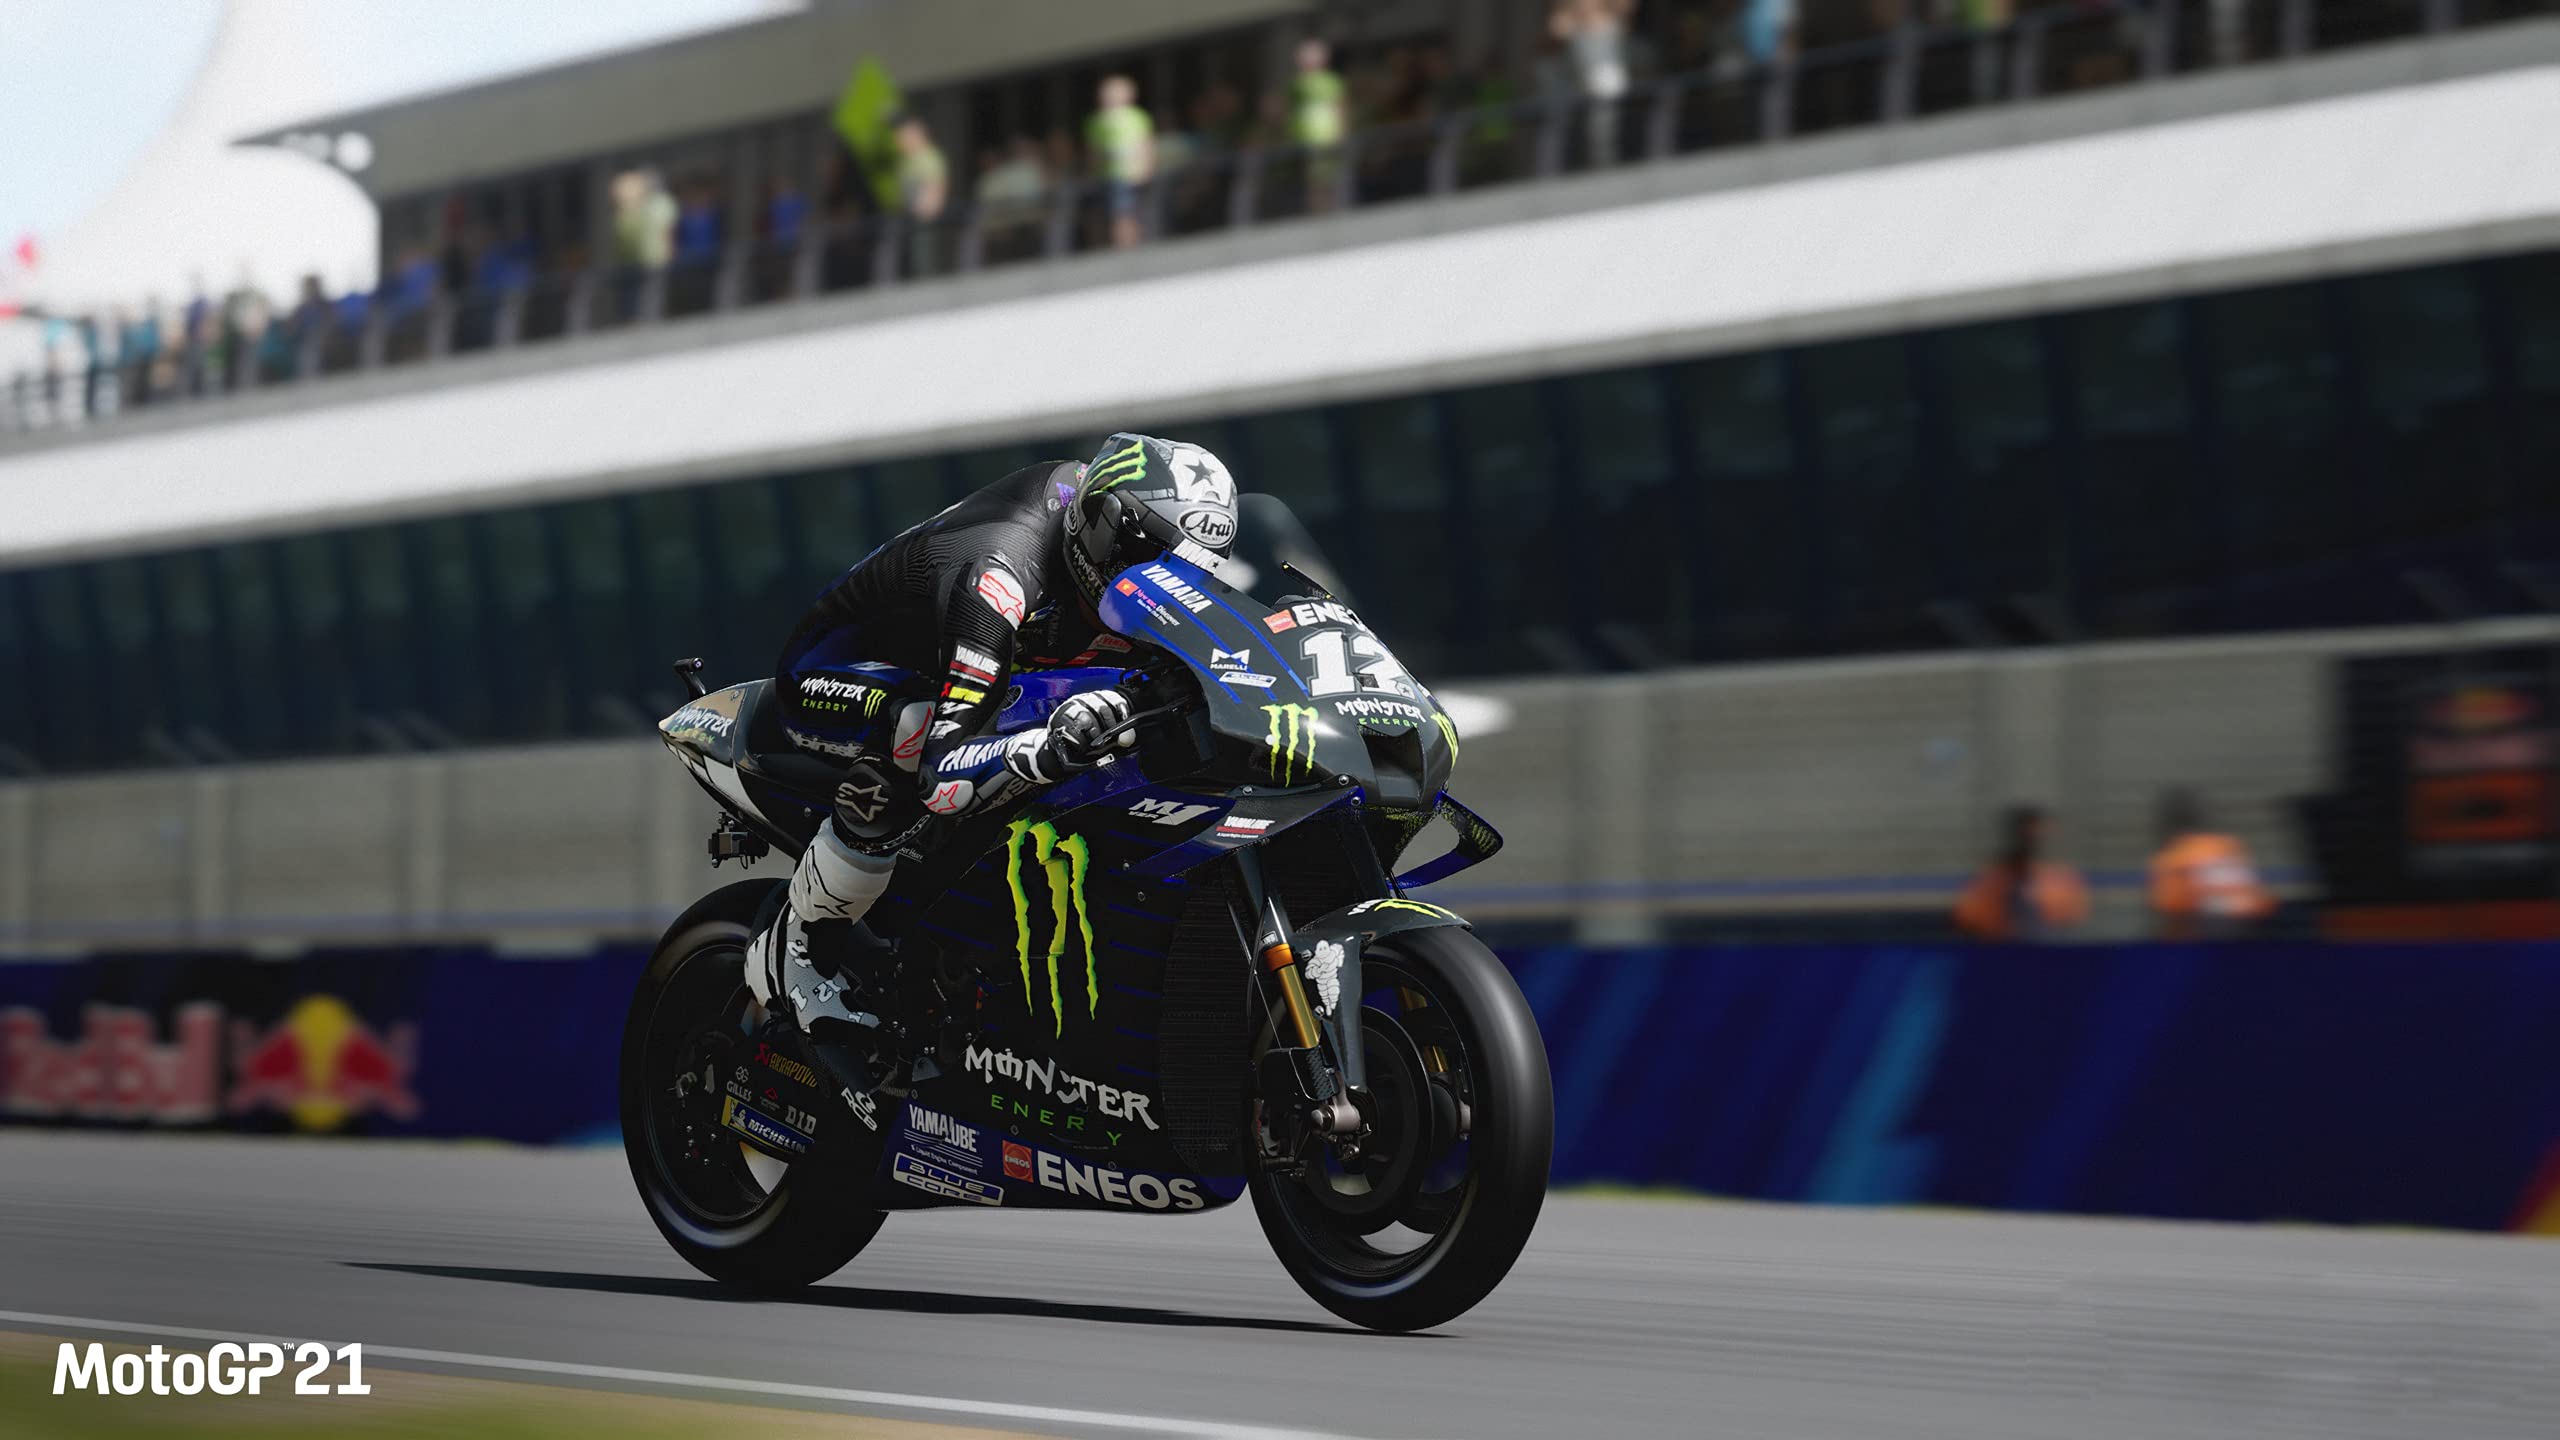 MotoGP 21 (PS4) (PS3)